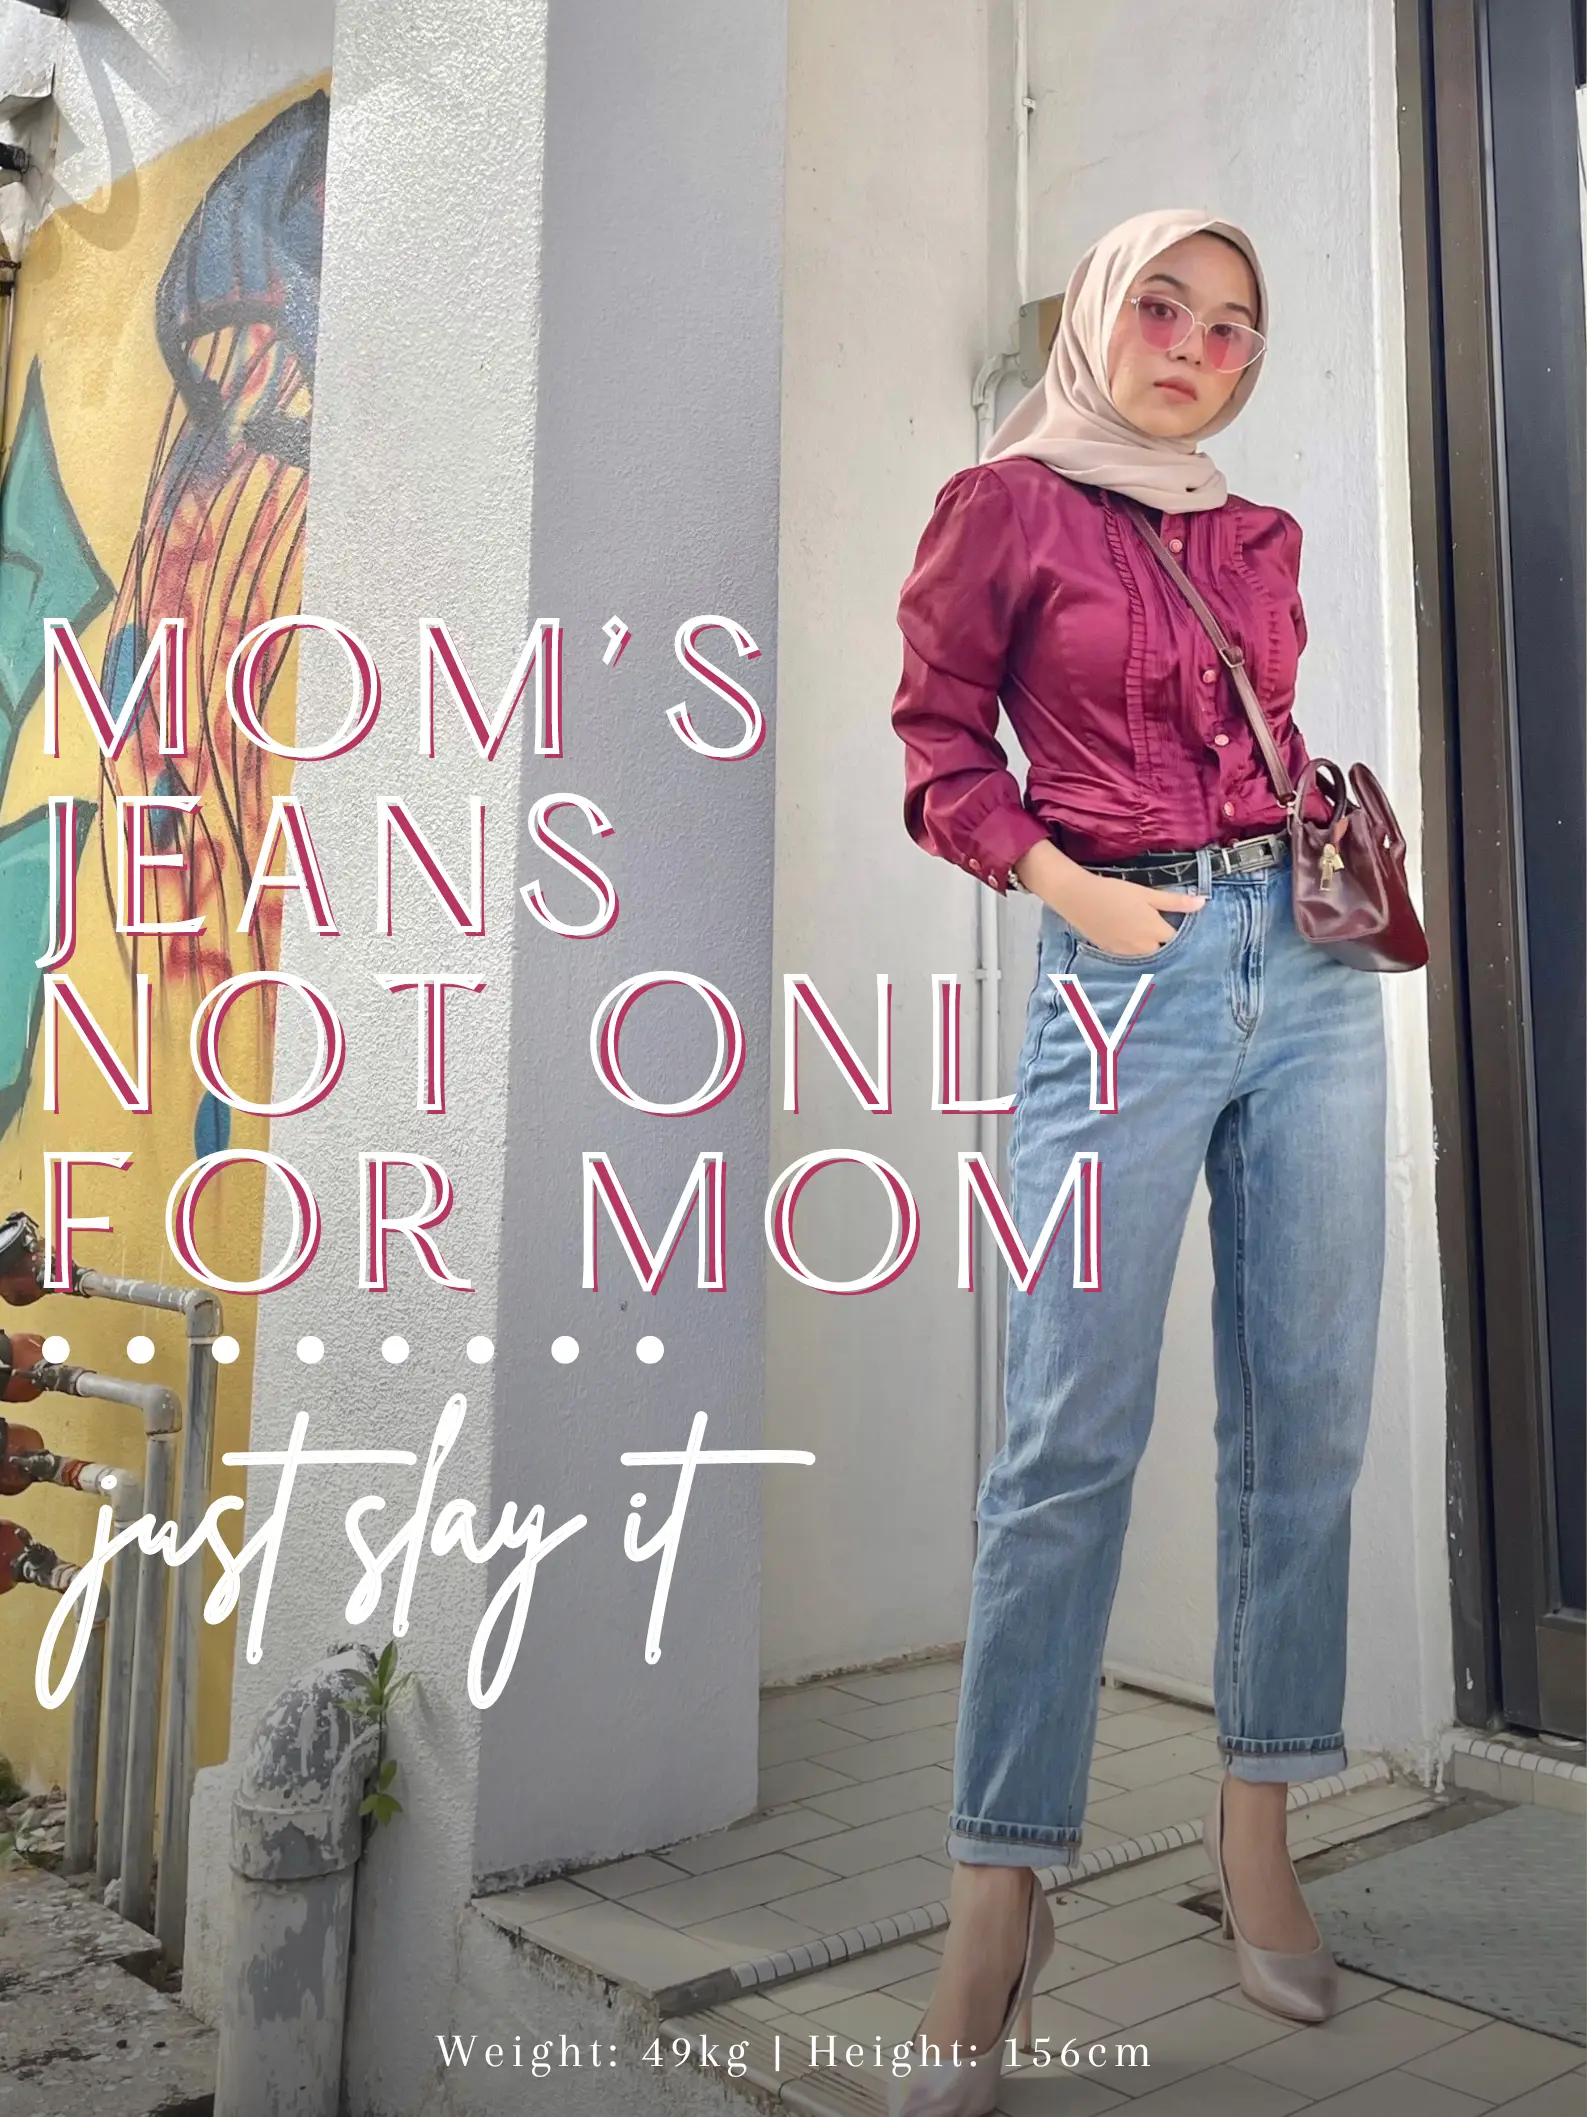 Mom's jeans not just for mommas!, Galeri disiarkan oleh Deanna